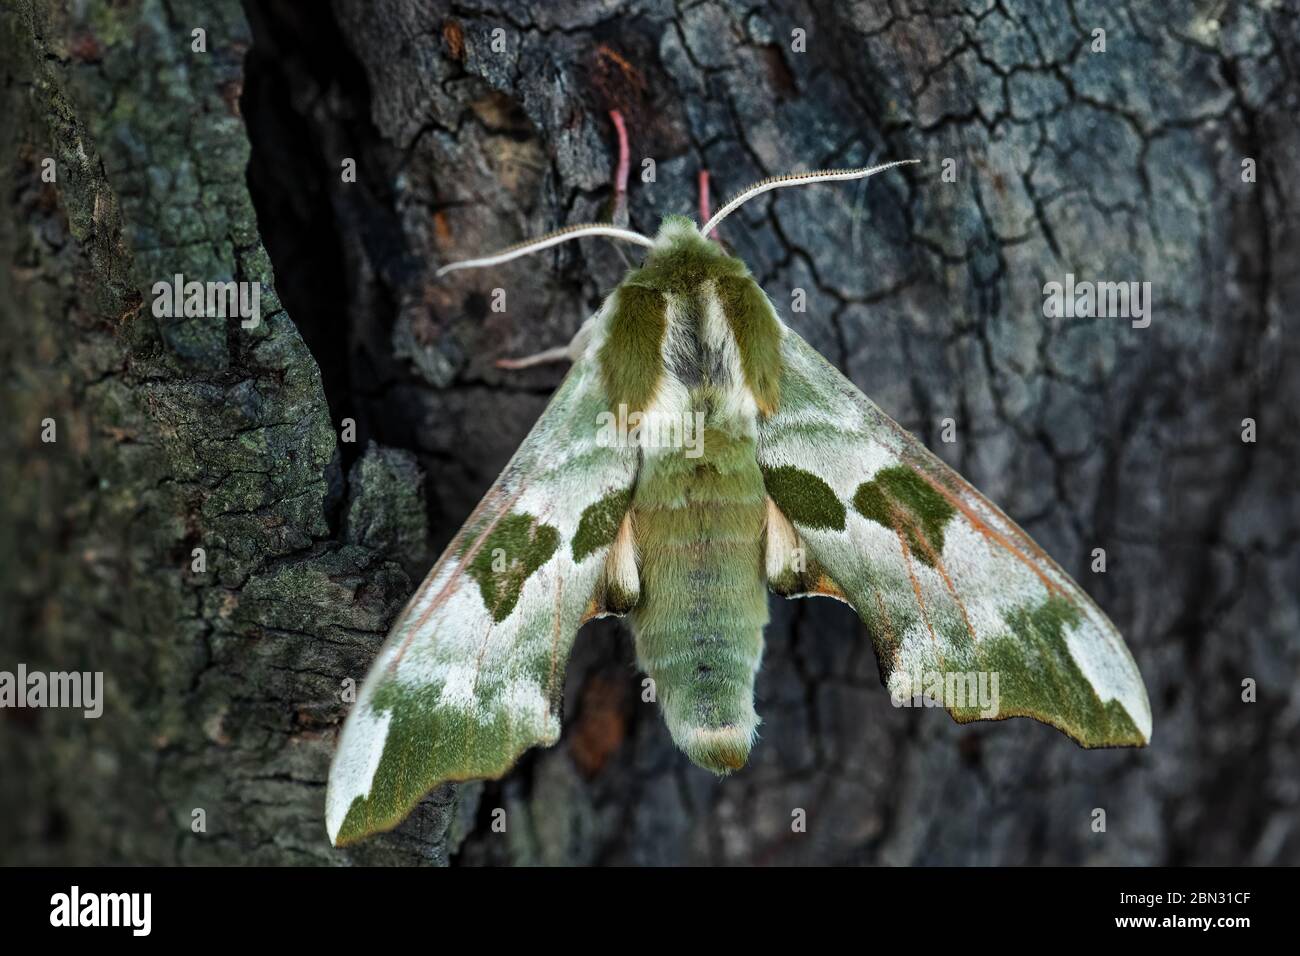 Lime Hawk-moth - Mimas tiliae, beautiful green hawk-moth from European forests and woodlands, Zlin, Czech Republic. Stock Photo